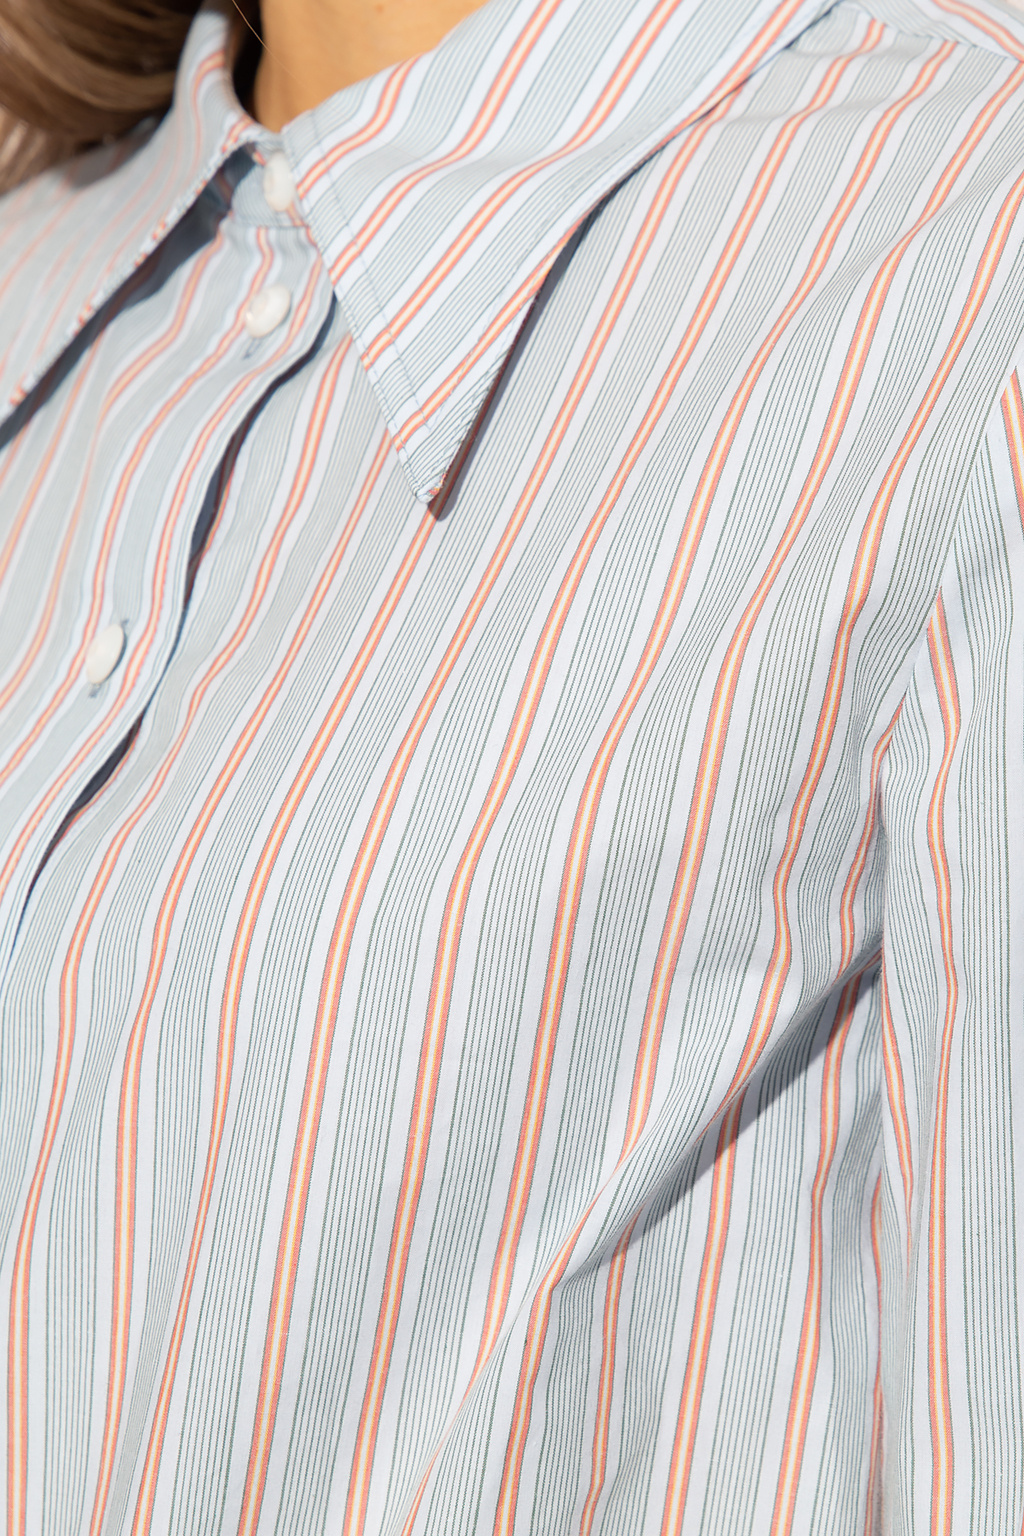 IetpShops Germany - Striped shirt Tory Burch - aime leon dore logo t shirt